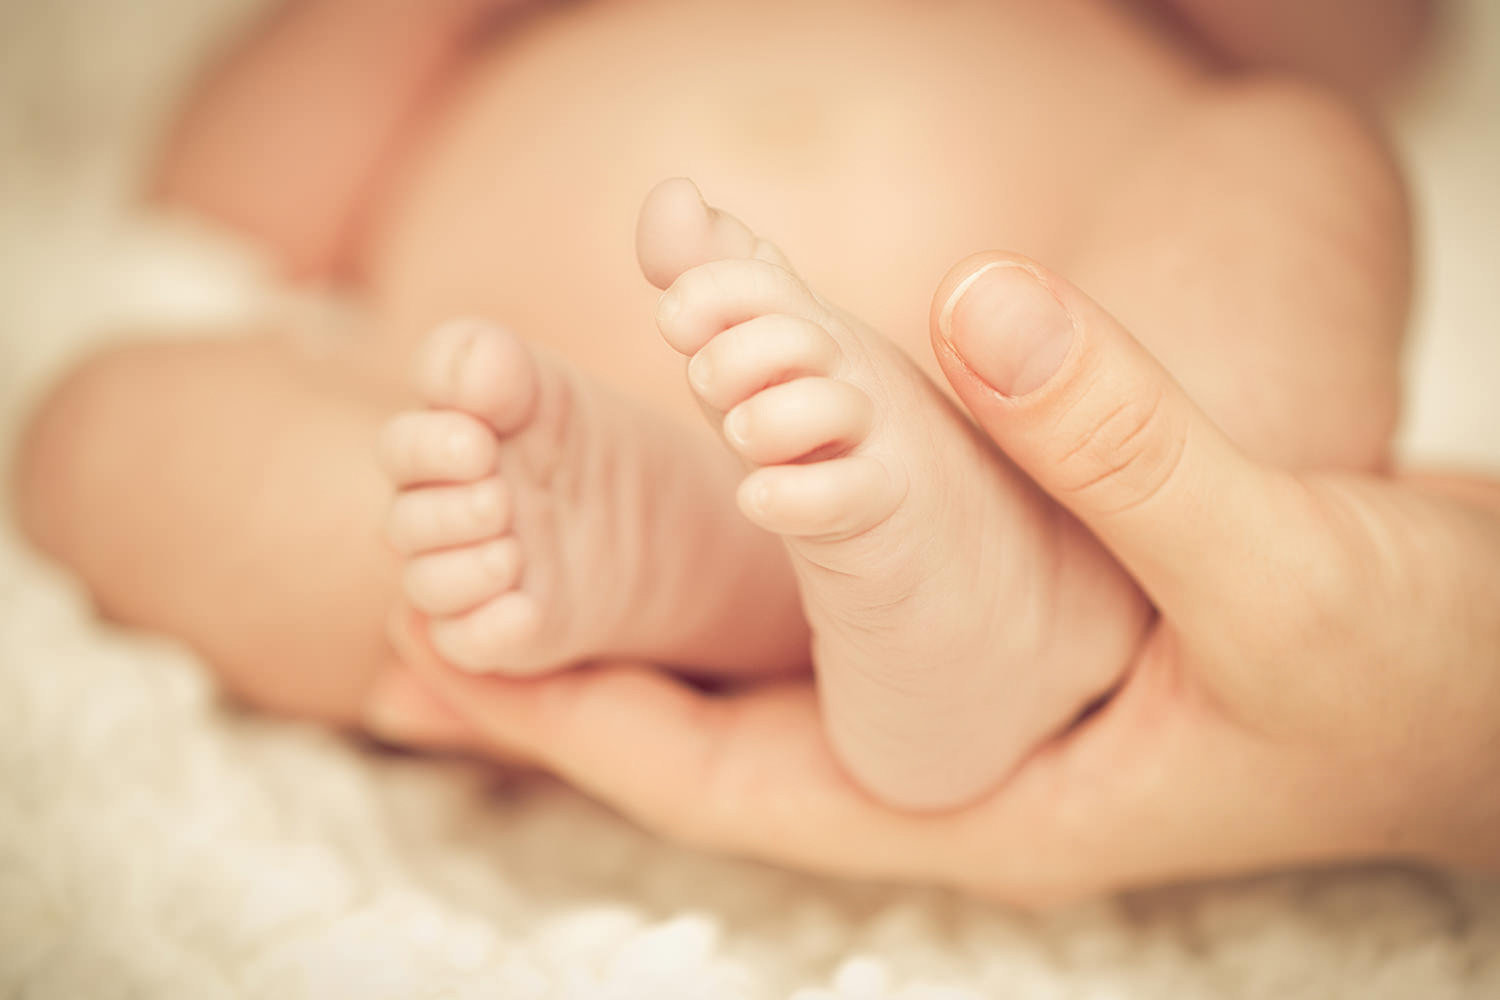 san diego newborn photographer | newborn feet with parents holding them